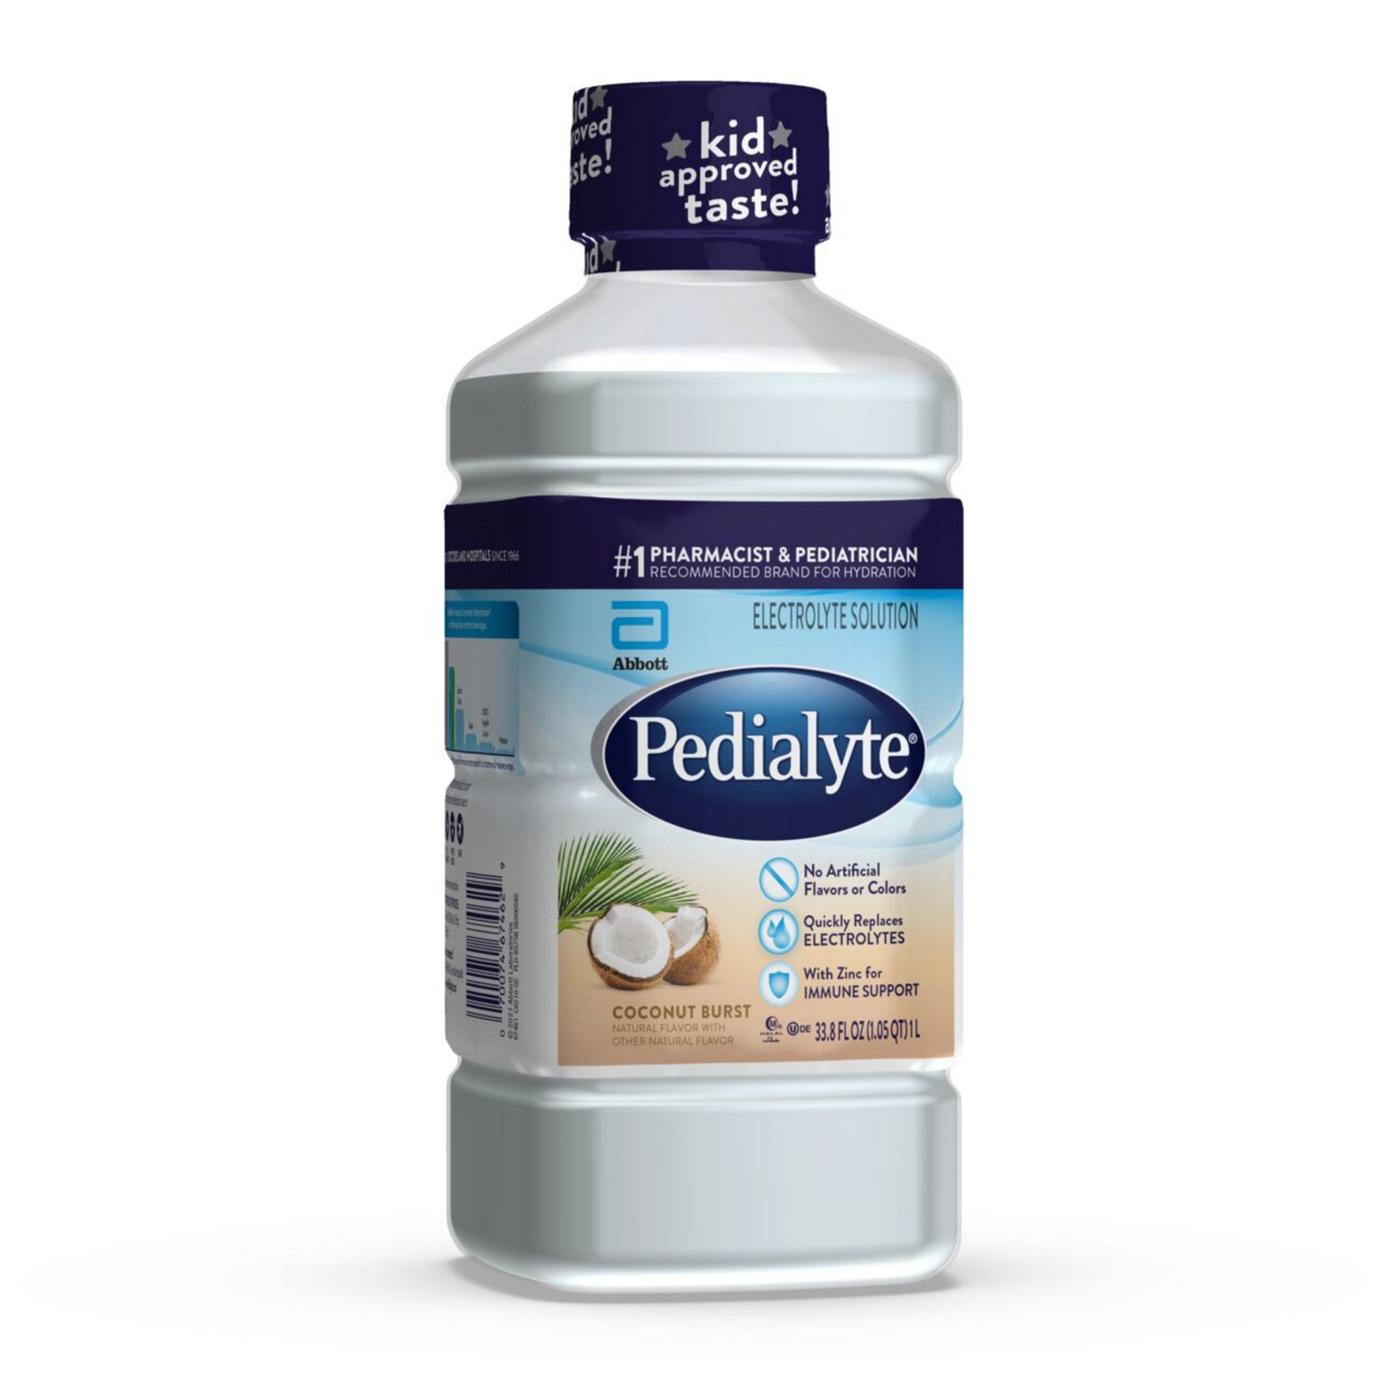 Pedialyte Electrolyte Solution - Coconut Burst; image 4 of 7